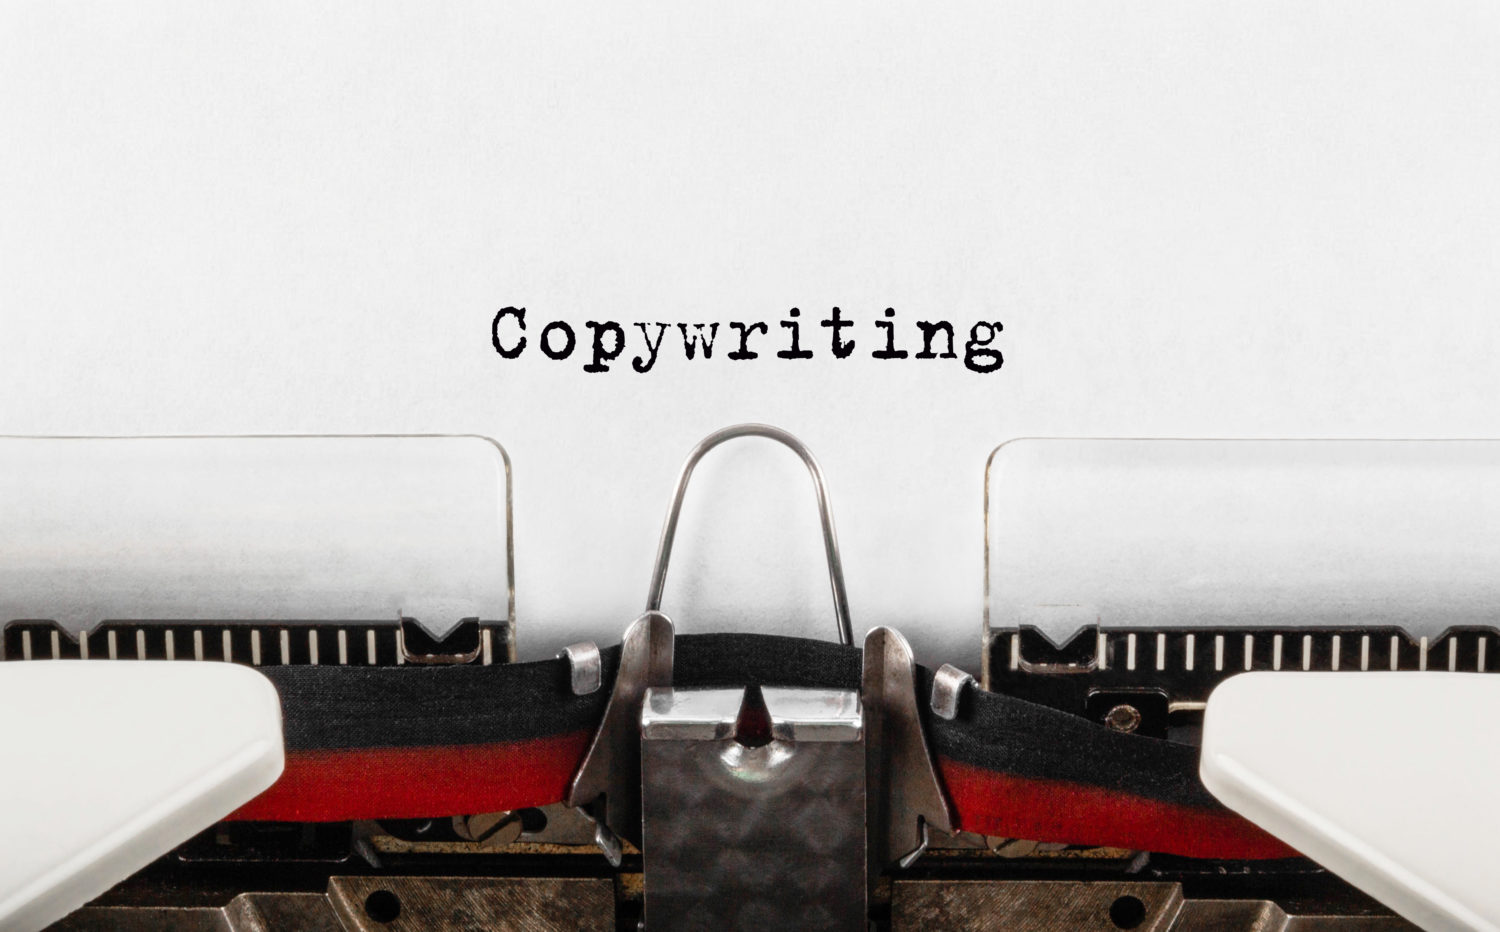 Text,Copywriting,Typed,On,Retro,Typewriter